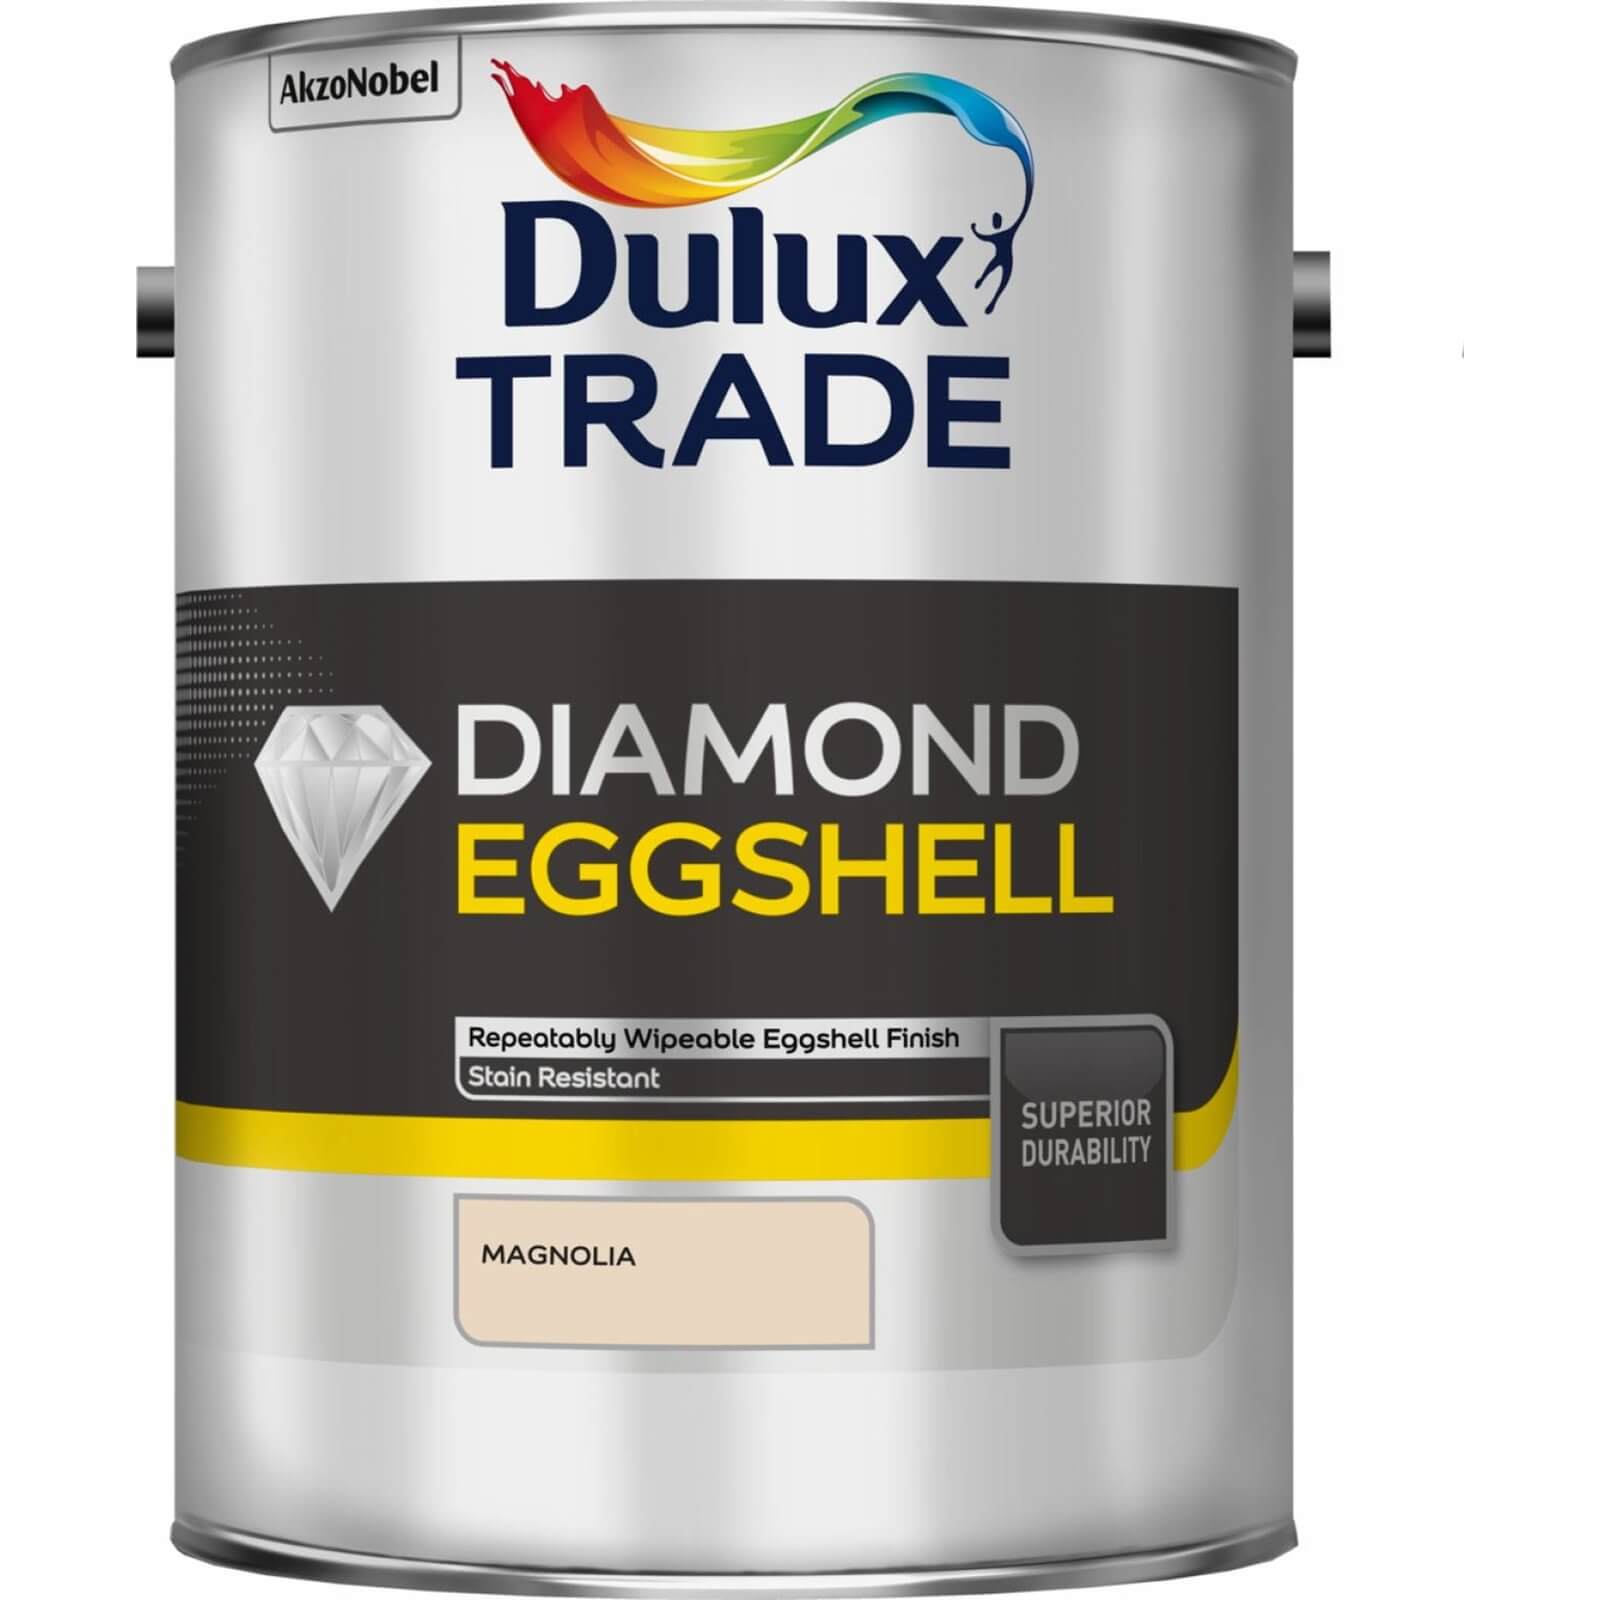 Dulux Trade Diamond Eggshell Magnolia - 5L